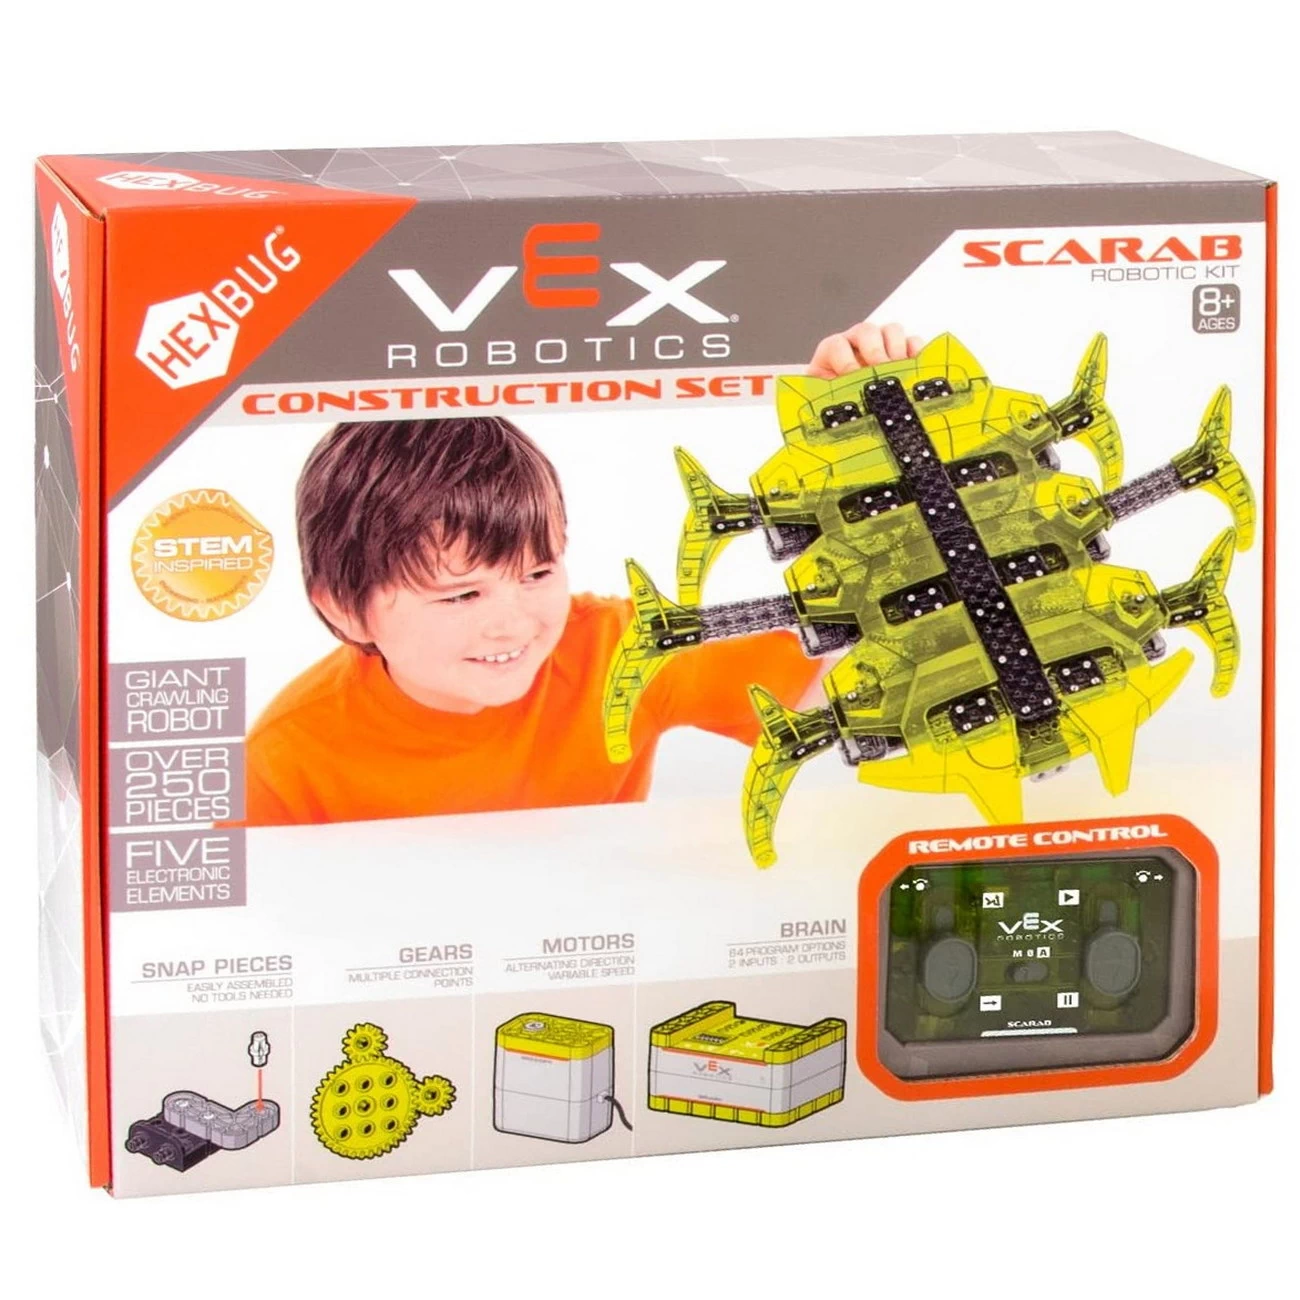 Hexbug Scarab - VEX Robotics